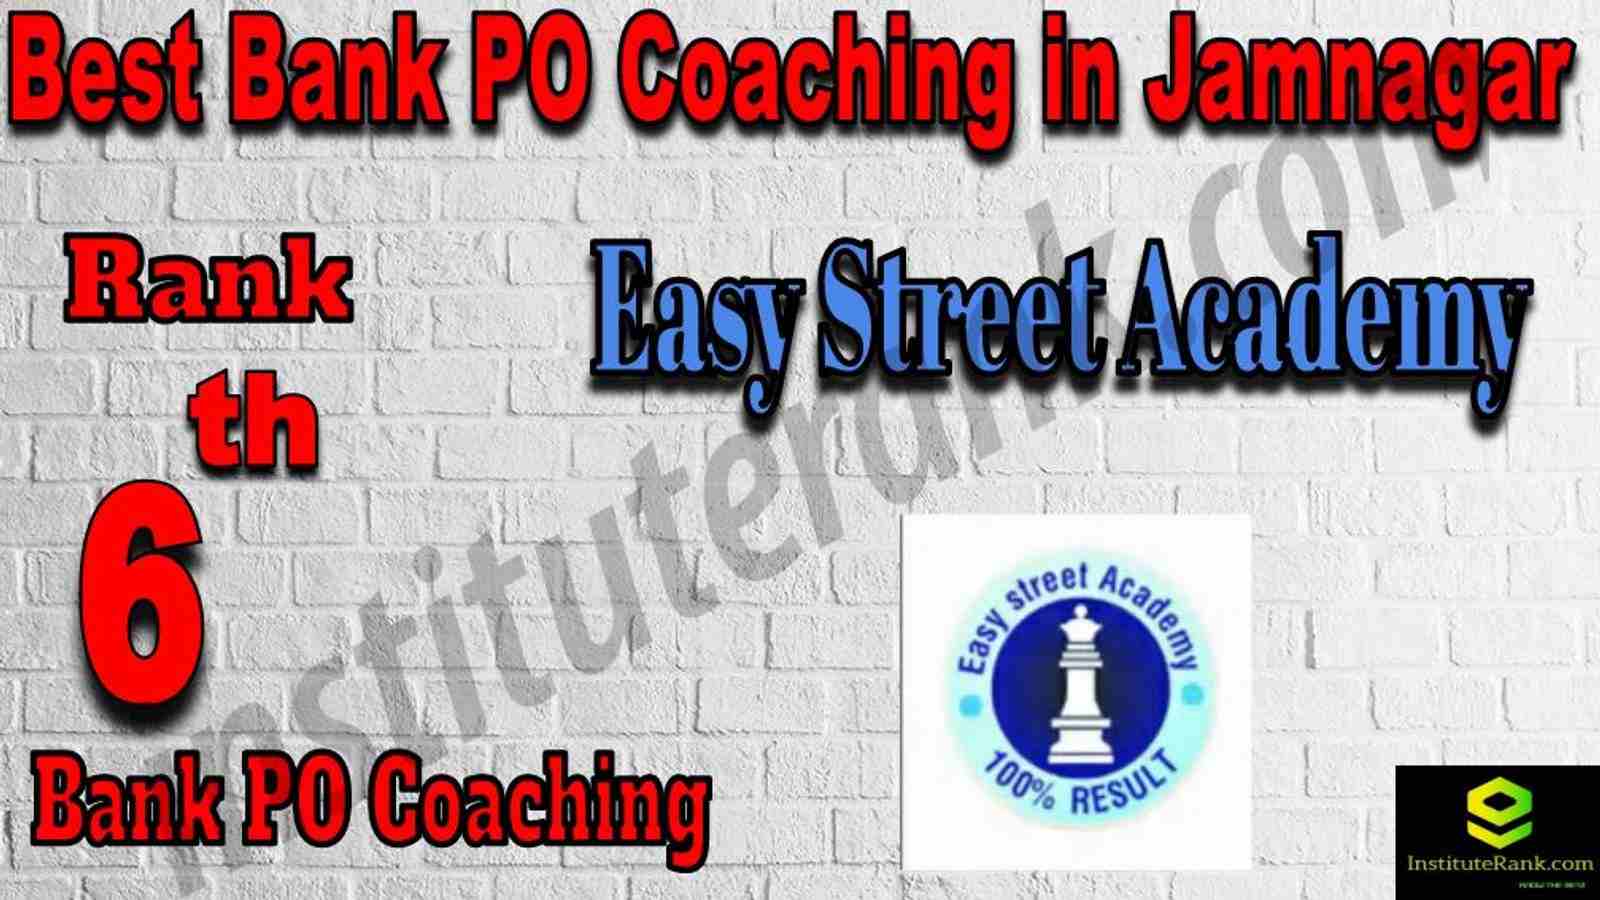 6th Best Bank PO Coaching in Jamnagar